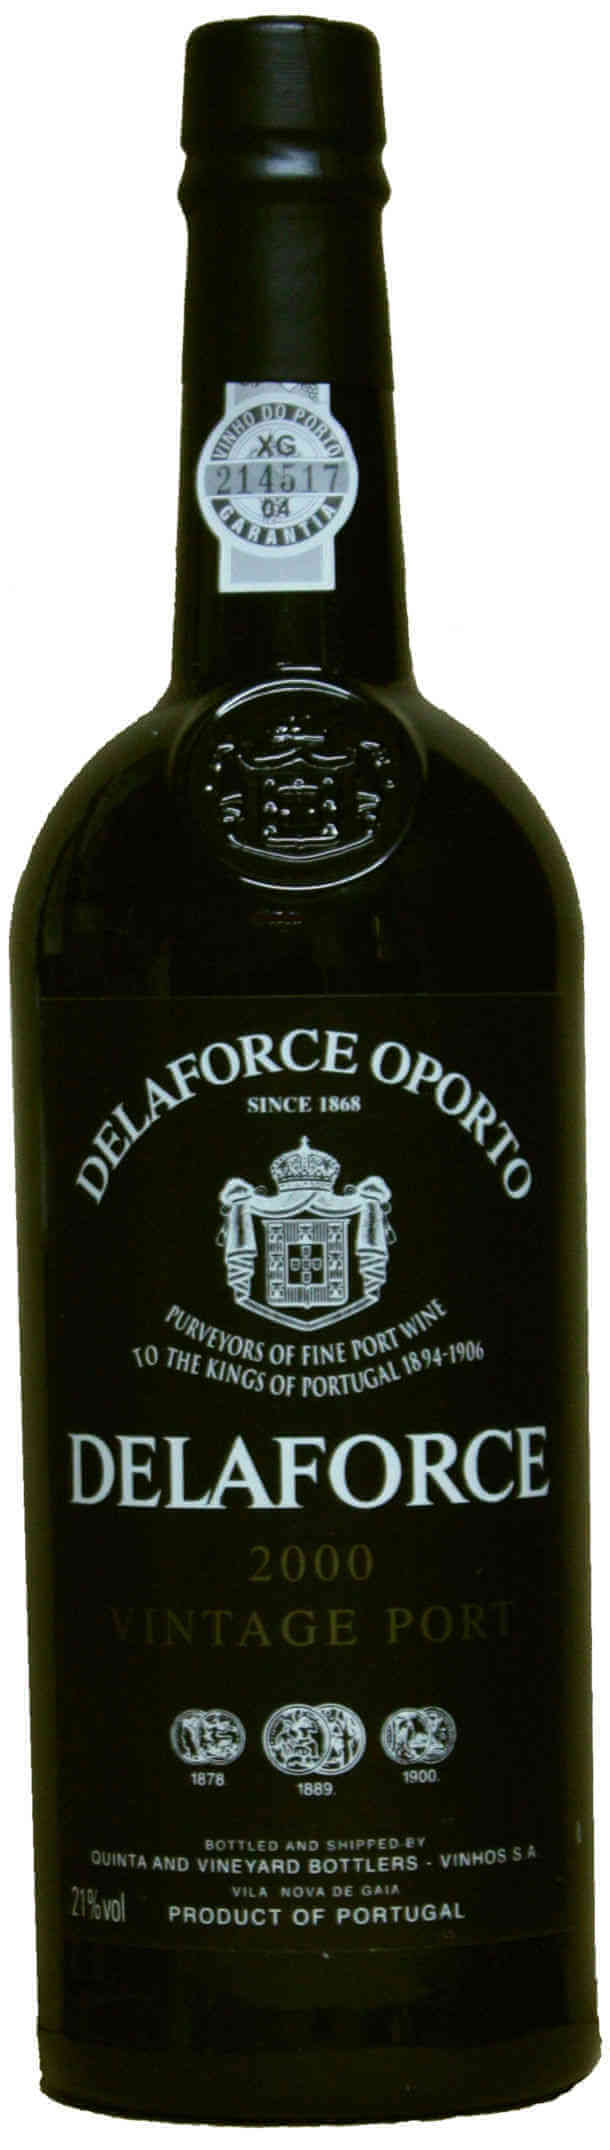 Delaforce-Vintage-Port-2000-150cl